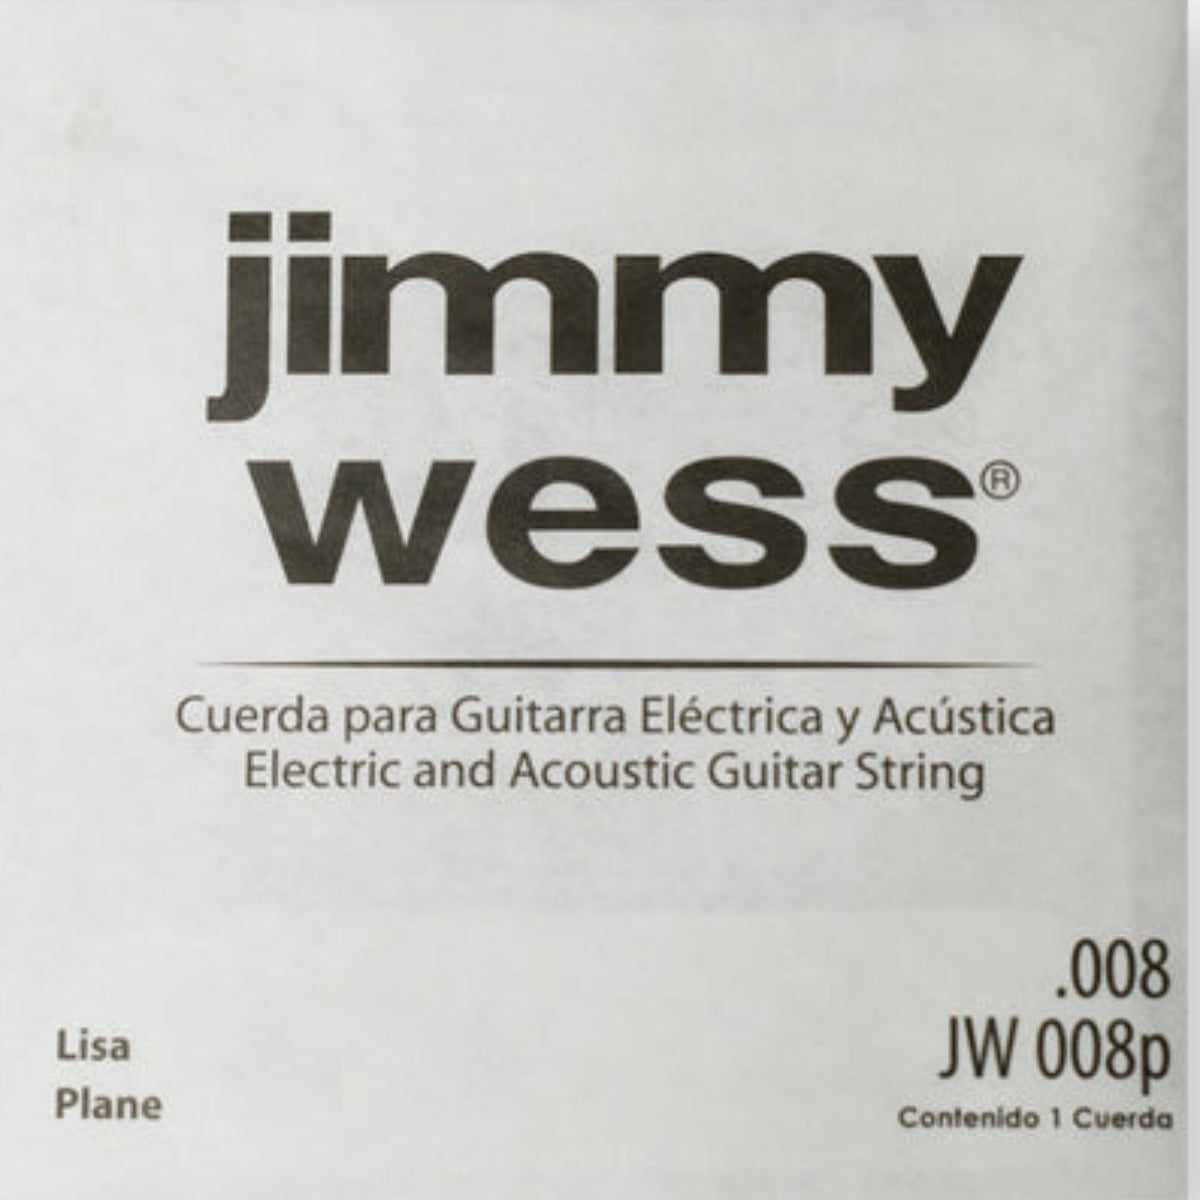 CUERDA P/GUITARRA ELECTRICA/ACUSTICA JIMMYWESS LISA 008